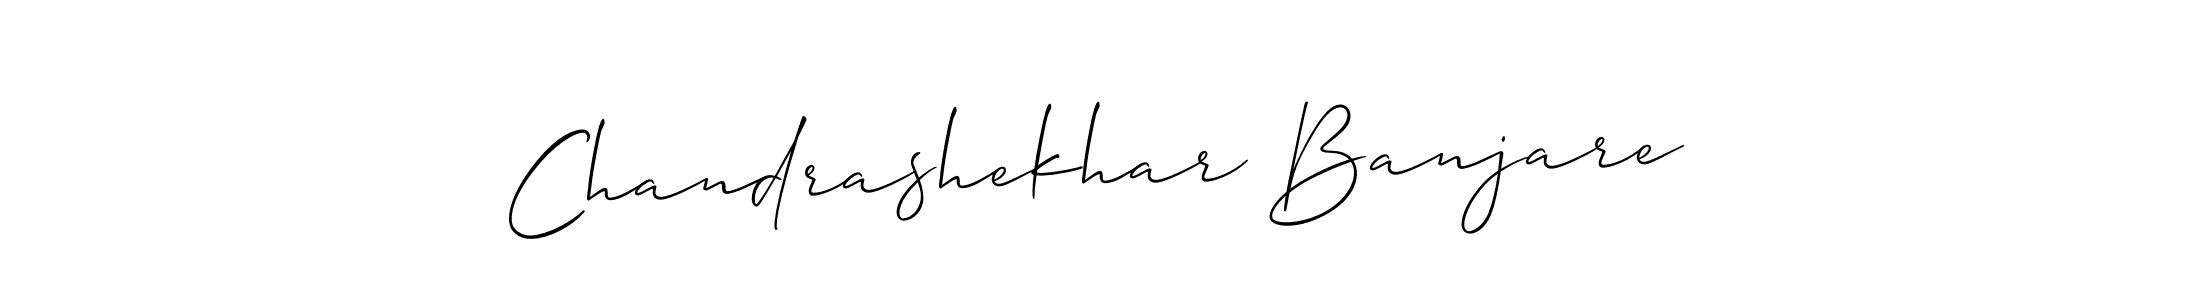 How to Draw Chandrashekhar Banjare signature style? Allison_Script is a latest design signature styles for name Chandrashekhar Banjare. Chandrashekhar Banjare signature style 2 images and pictures png